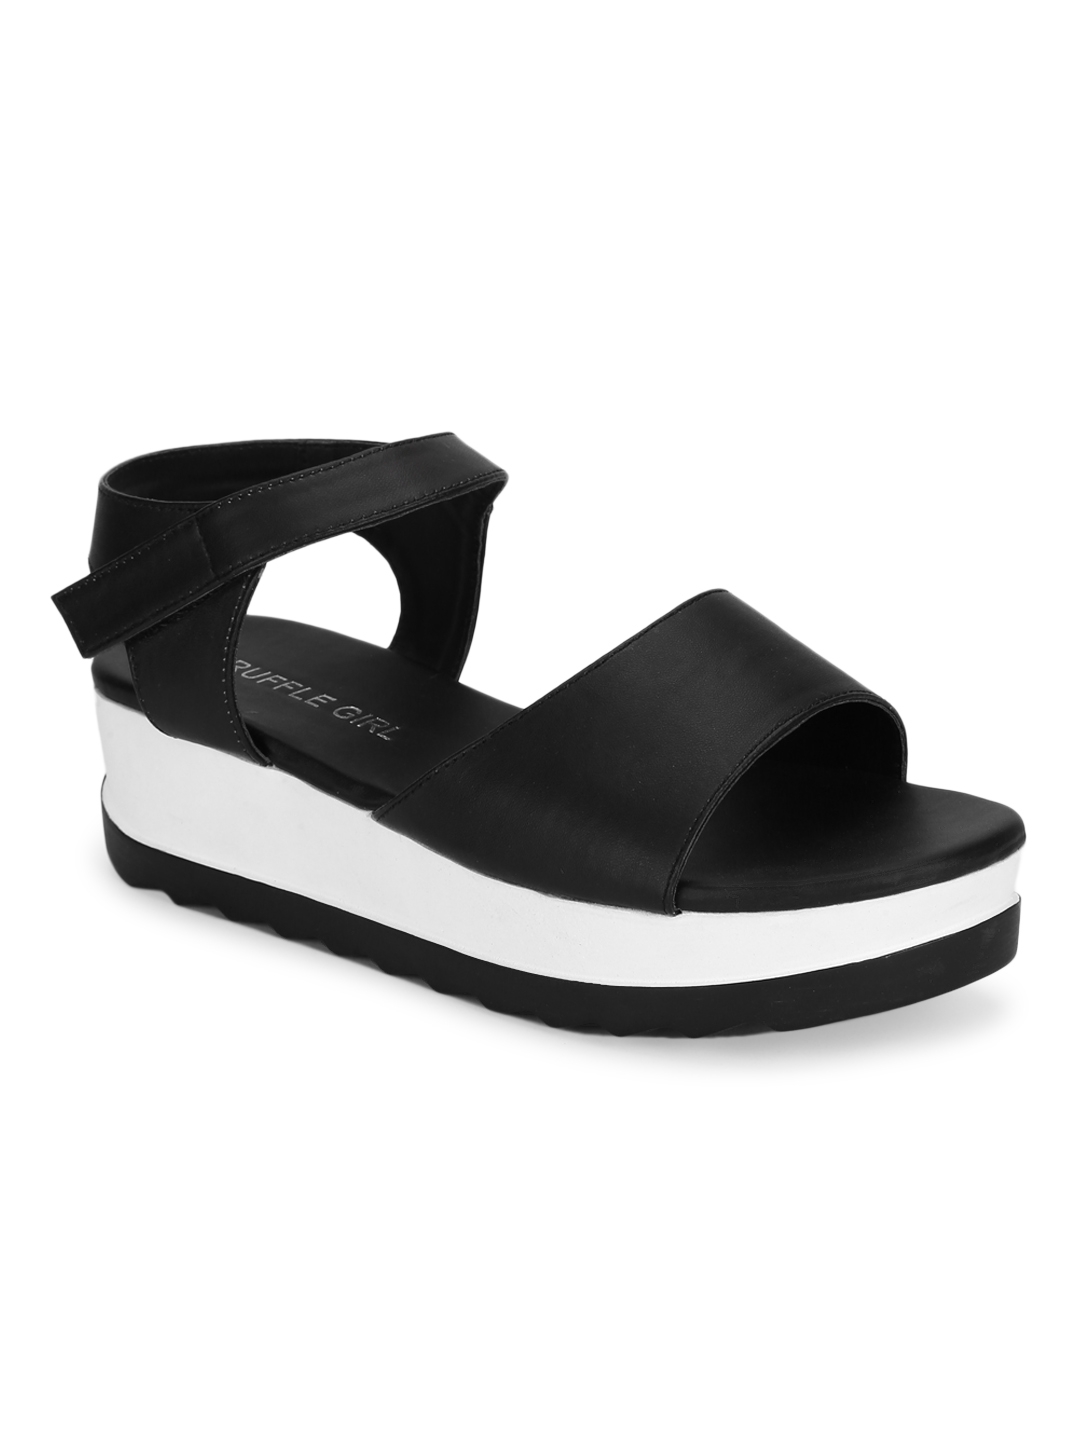 Black PU Platform Wedge Sandals